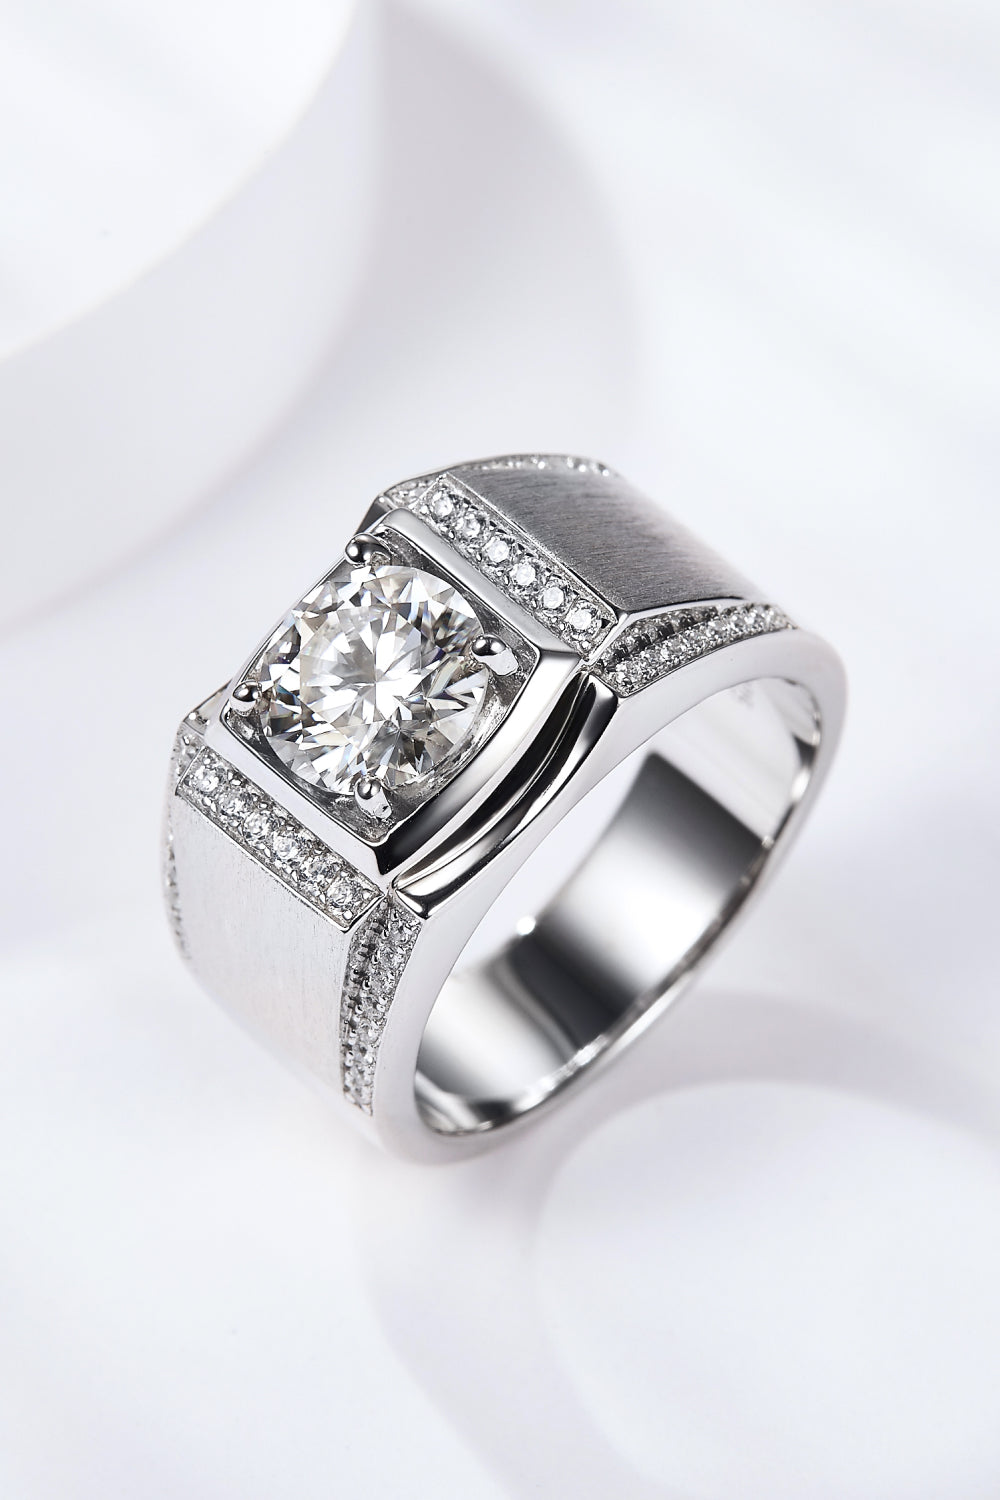 So Charmed 1 Carat Moissanite Ring Silver